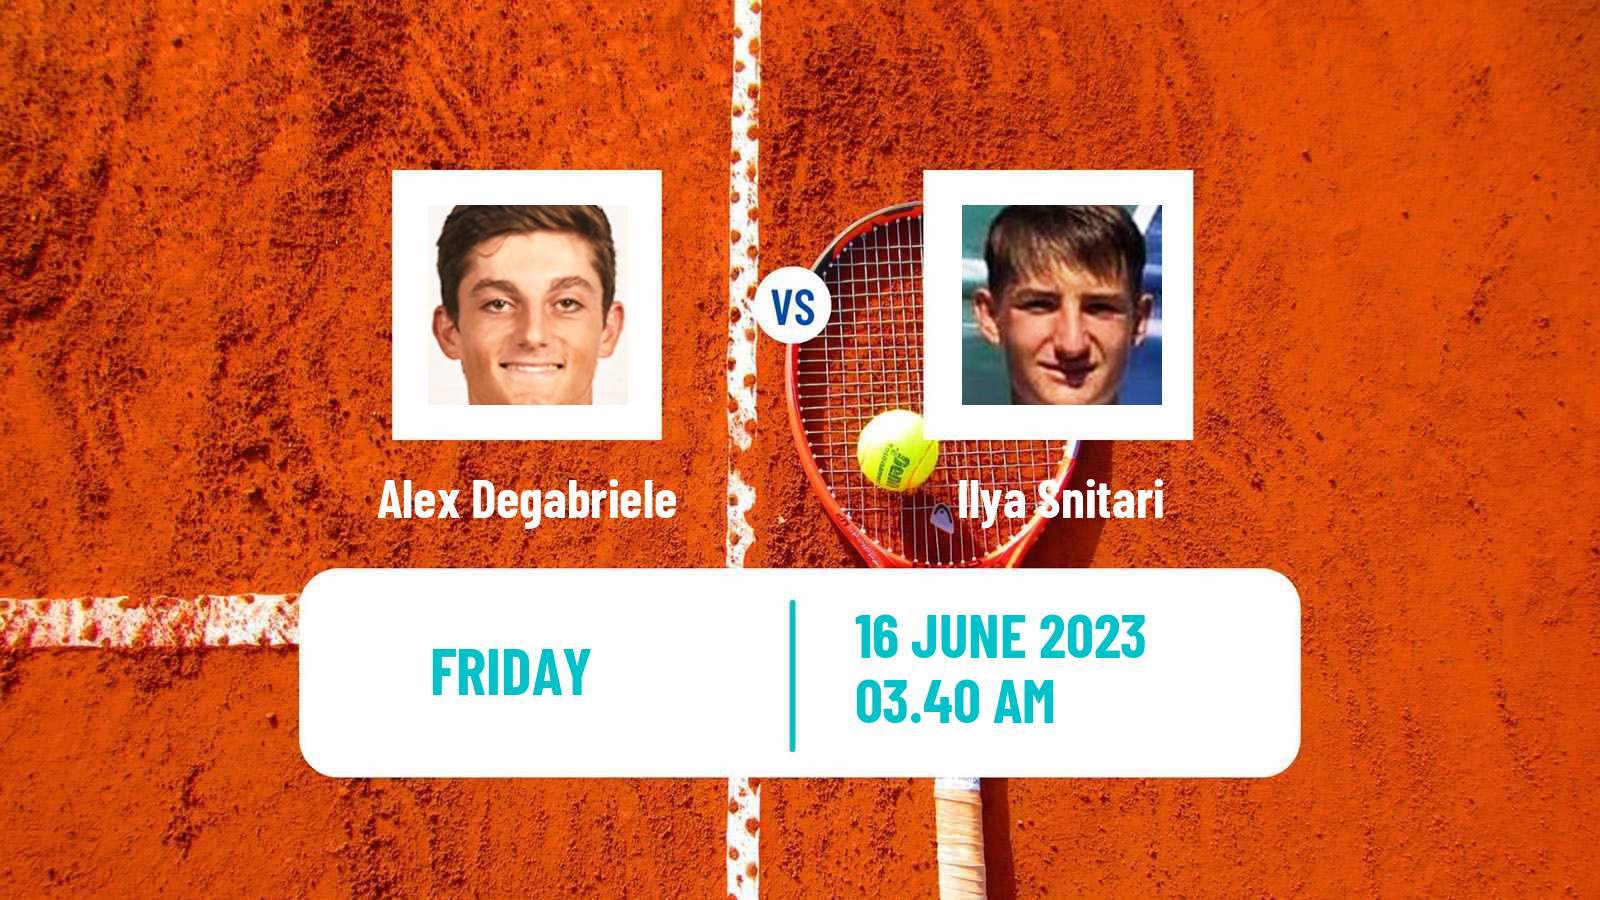 Tennis Davis Cup Group III Alex Degabriele - Ilya Snitari